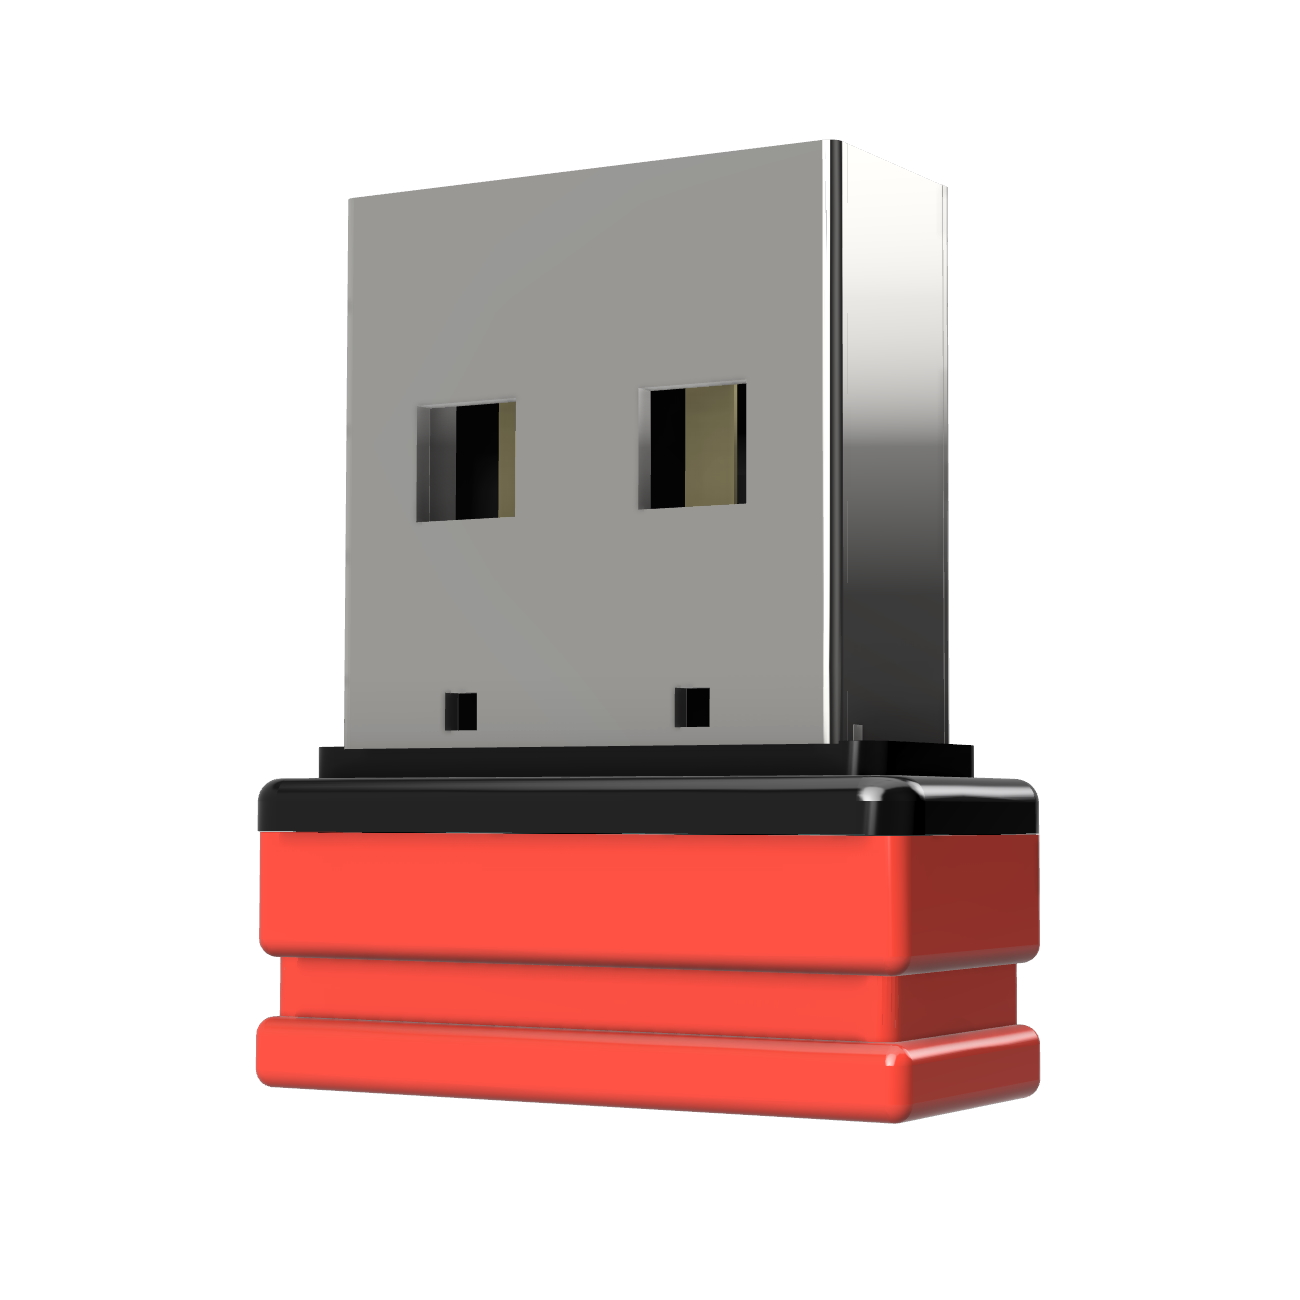 USB GERMANY GB) (Rot/Schwarz, USB-Stick ®ULTRA P1 Mini 1